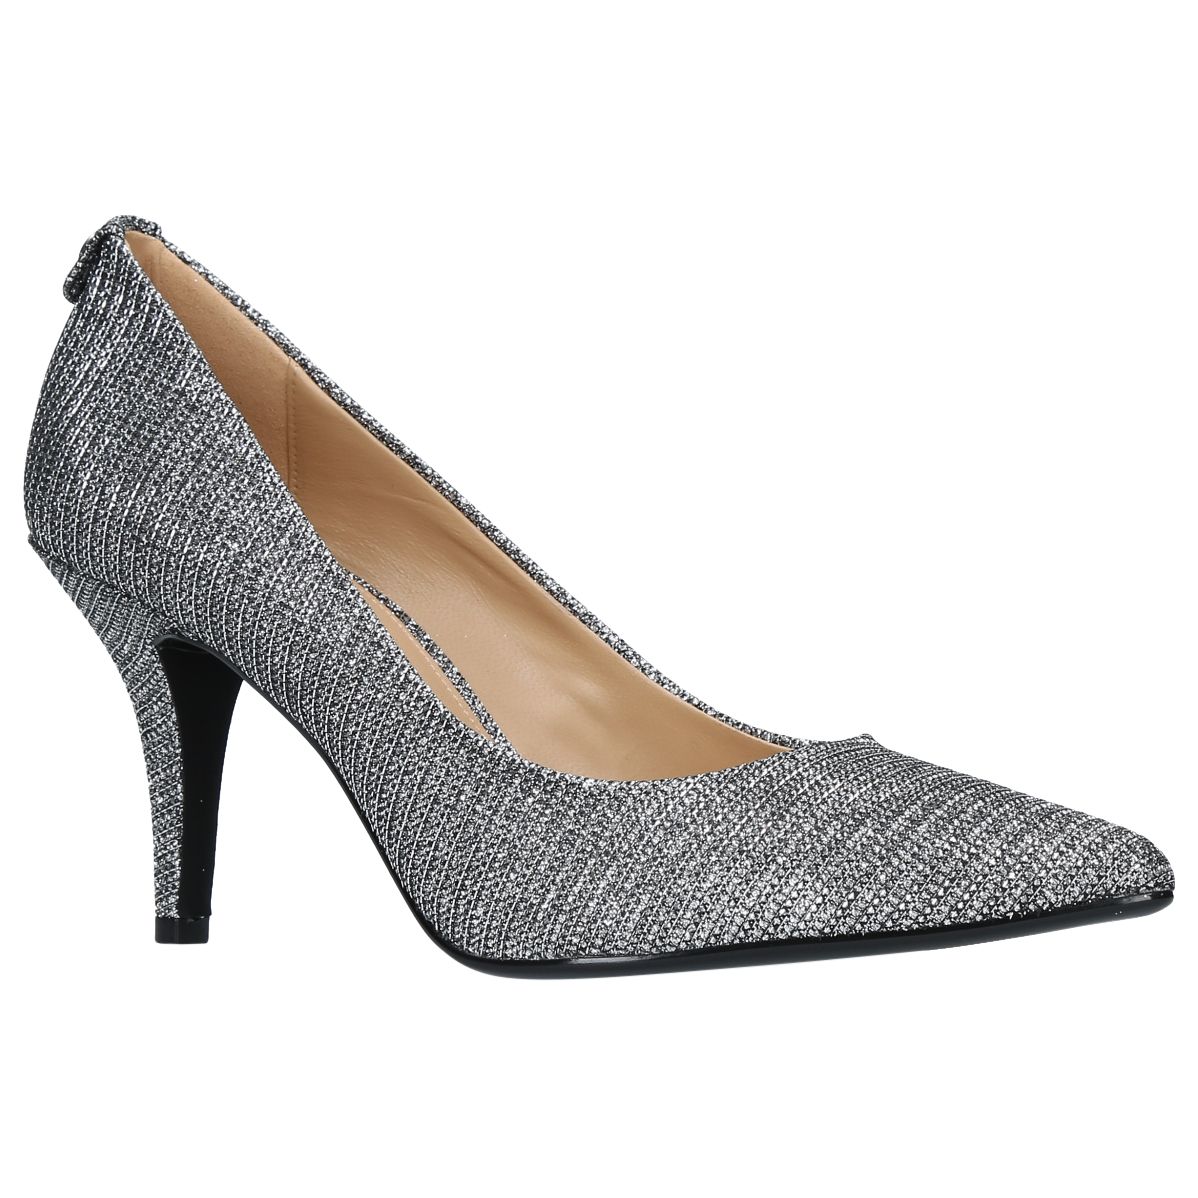 MICHAEL Michael Kors Flex High Heeled Stiletto Court Shoes, Silver